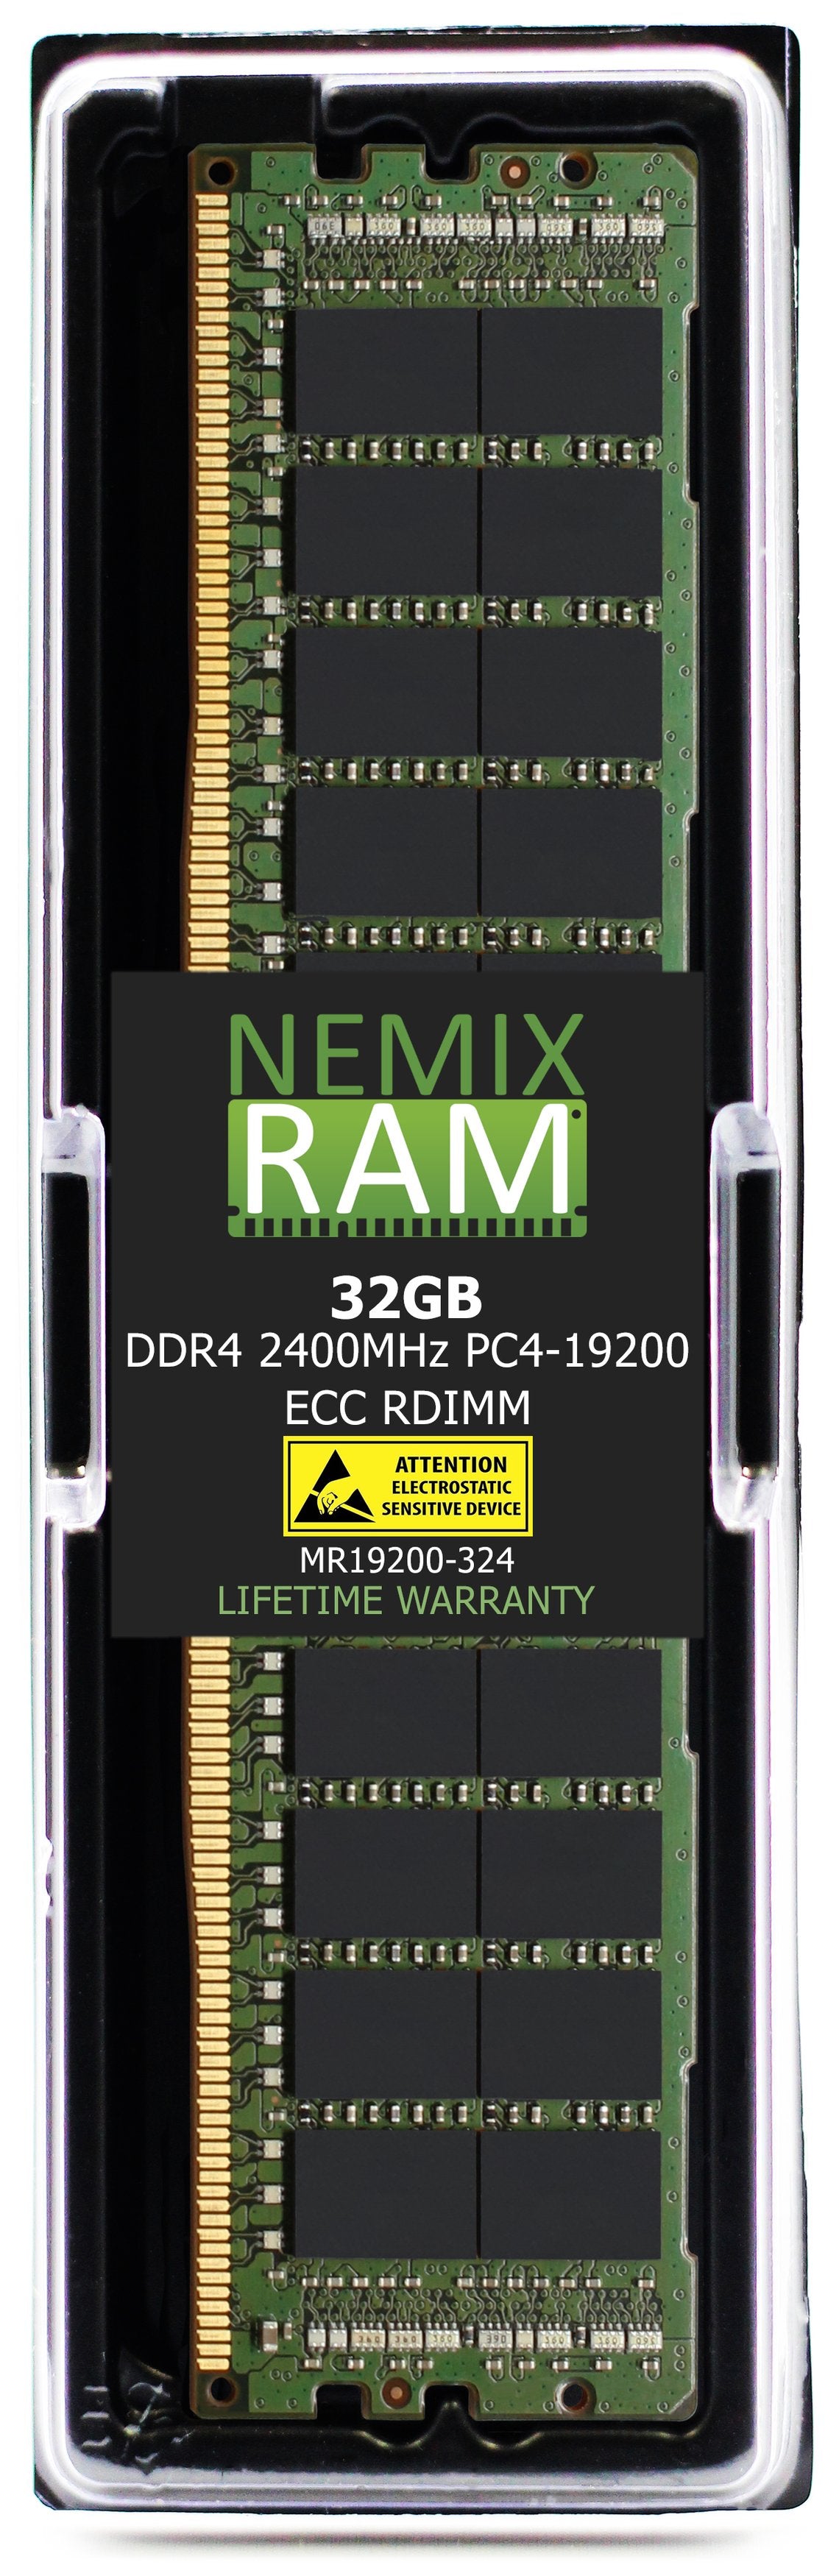 32GB DDR4 2400MHZ PC4-19200 RDIMM Compatible with Supermicro MEM-DR432L-HL02-ER24